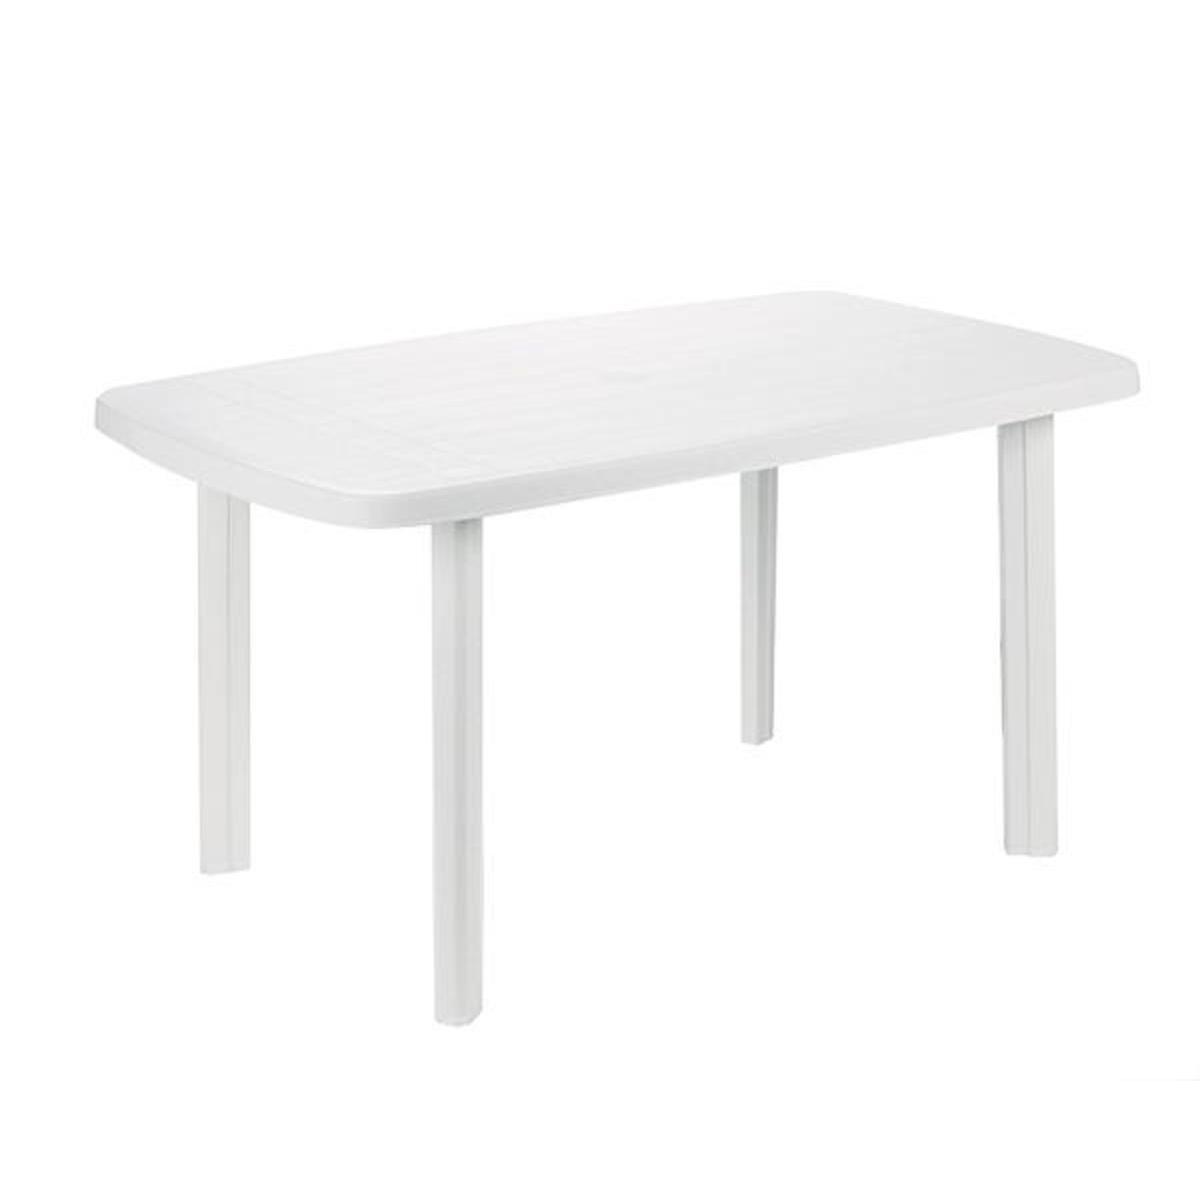 Table rectangulaire - 137 x 85 x H 72 cm - Blanc